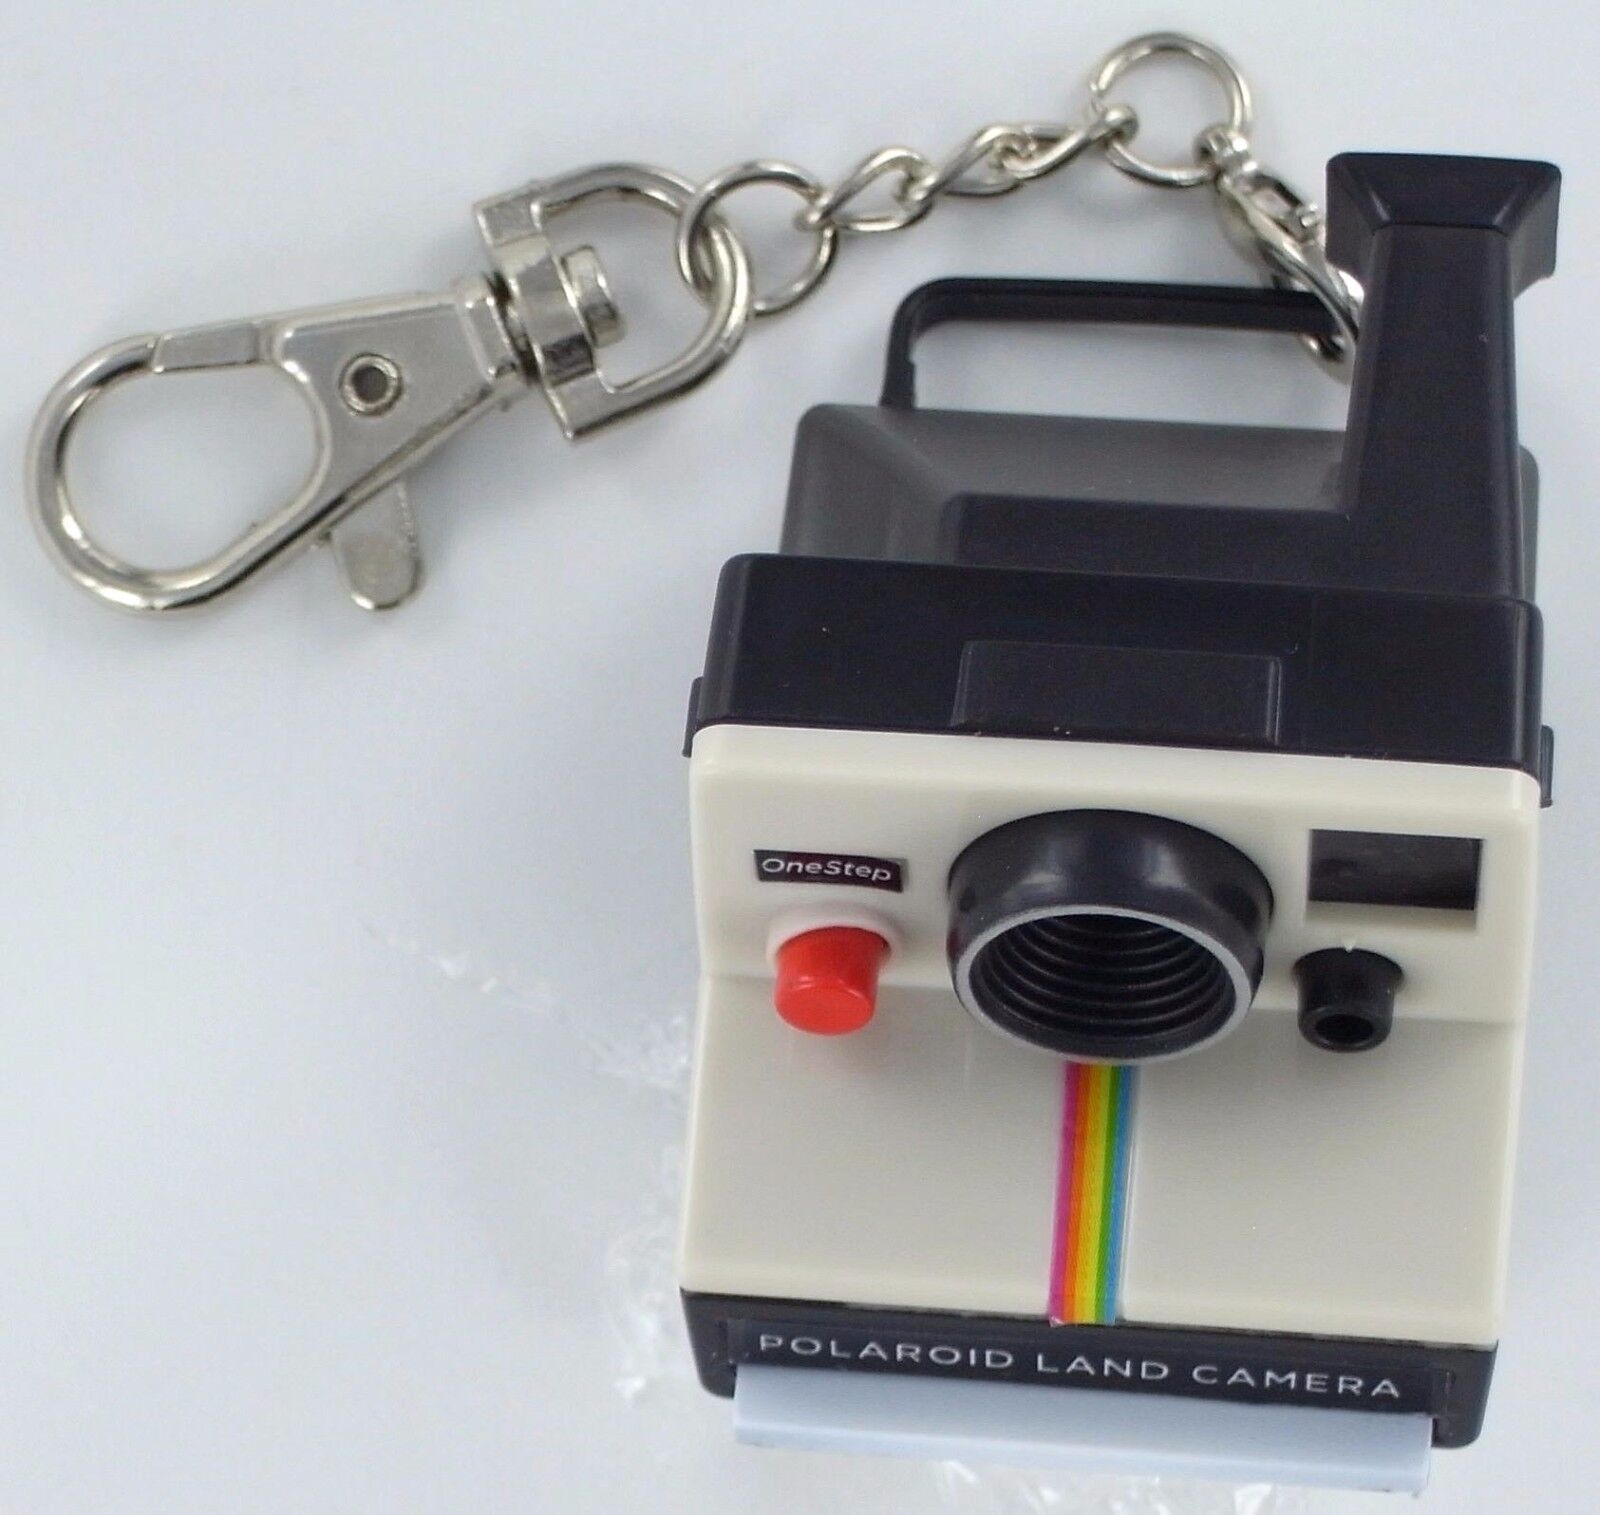 Worlds Coolest Smallest POLAROID LAND CAMERA Toy Miniature Mini OneStep Keychain Без бренда - фотография #6